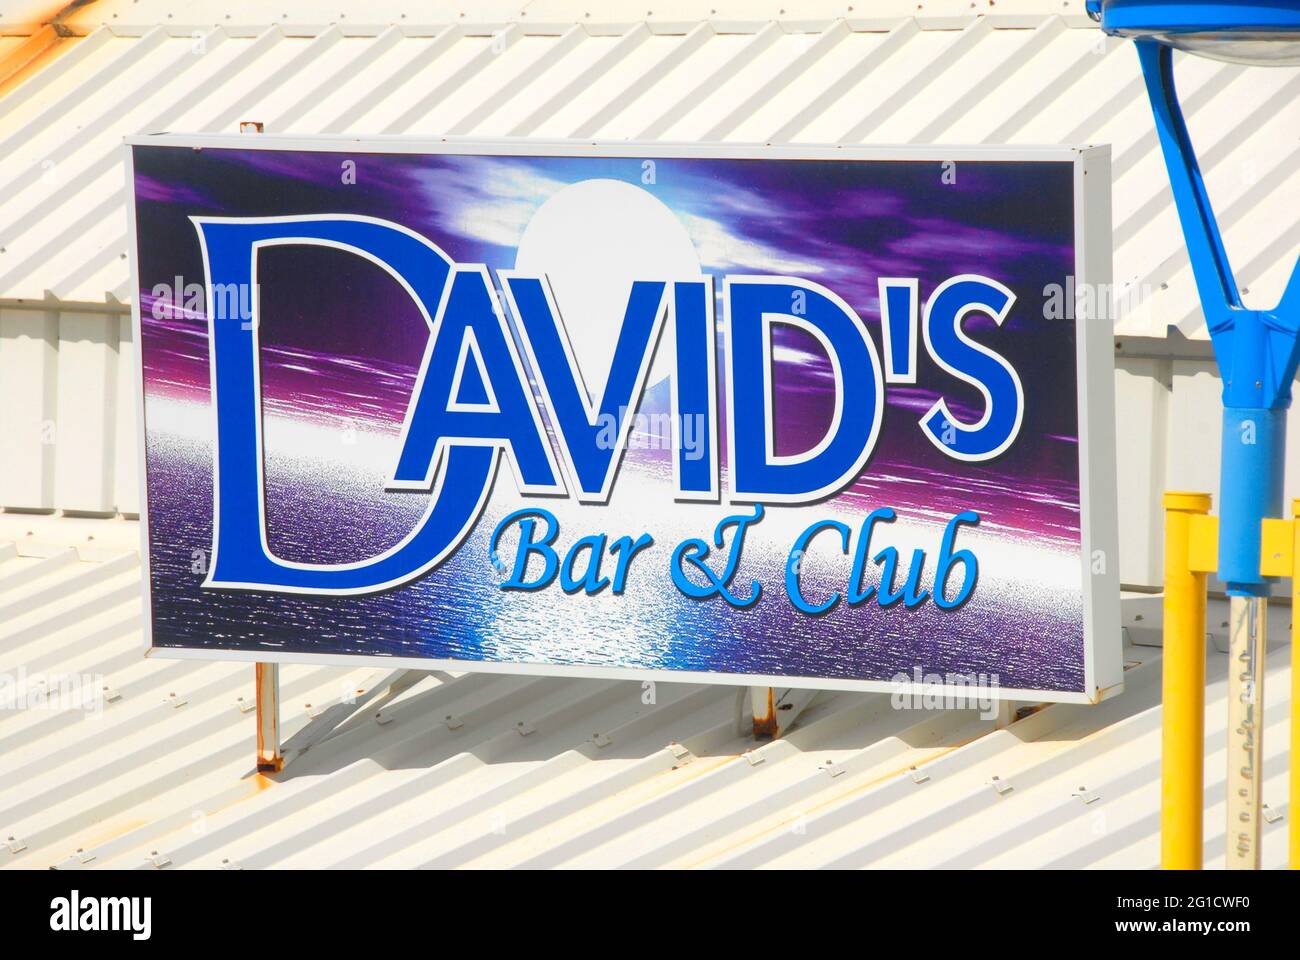 Large advertising display for David' bar and club, St Martin, Caribbean Stock Photo